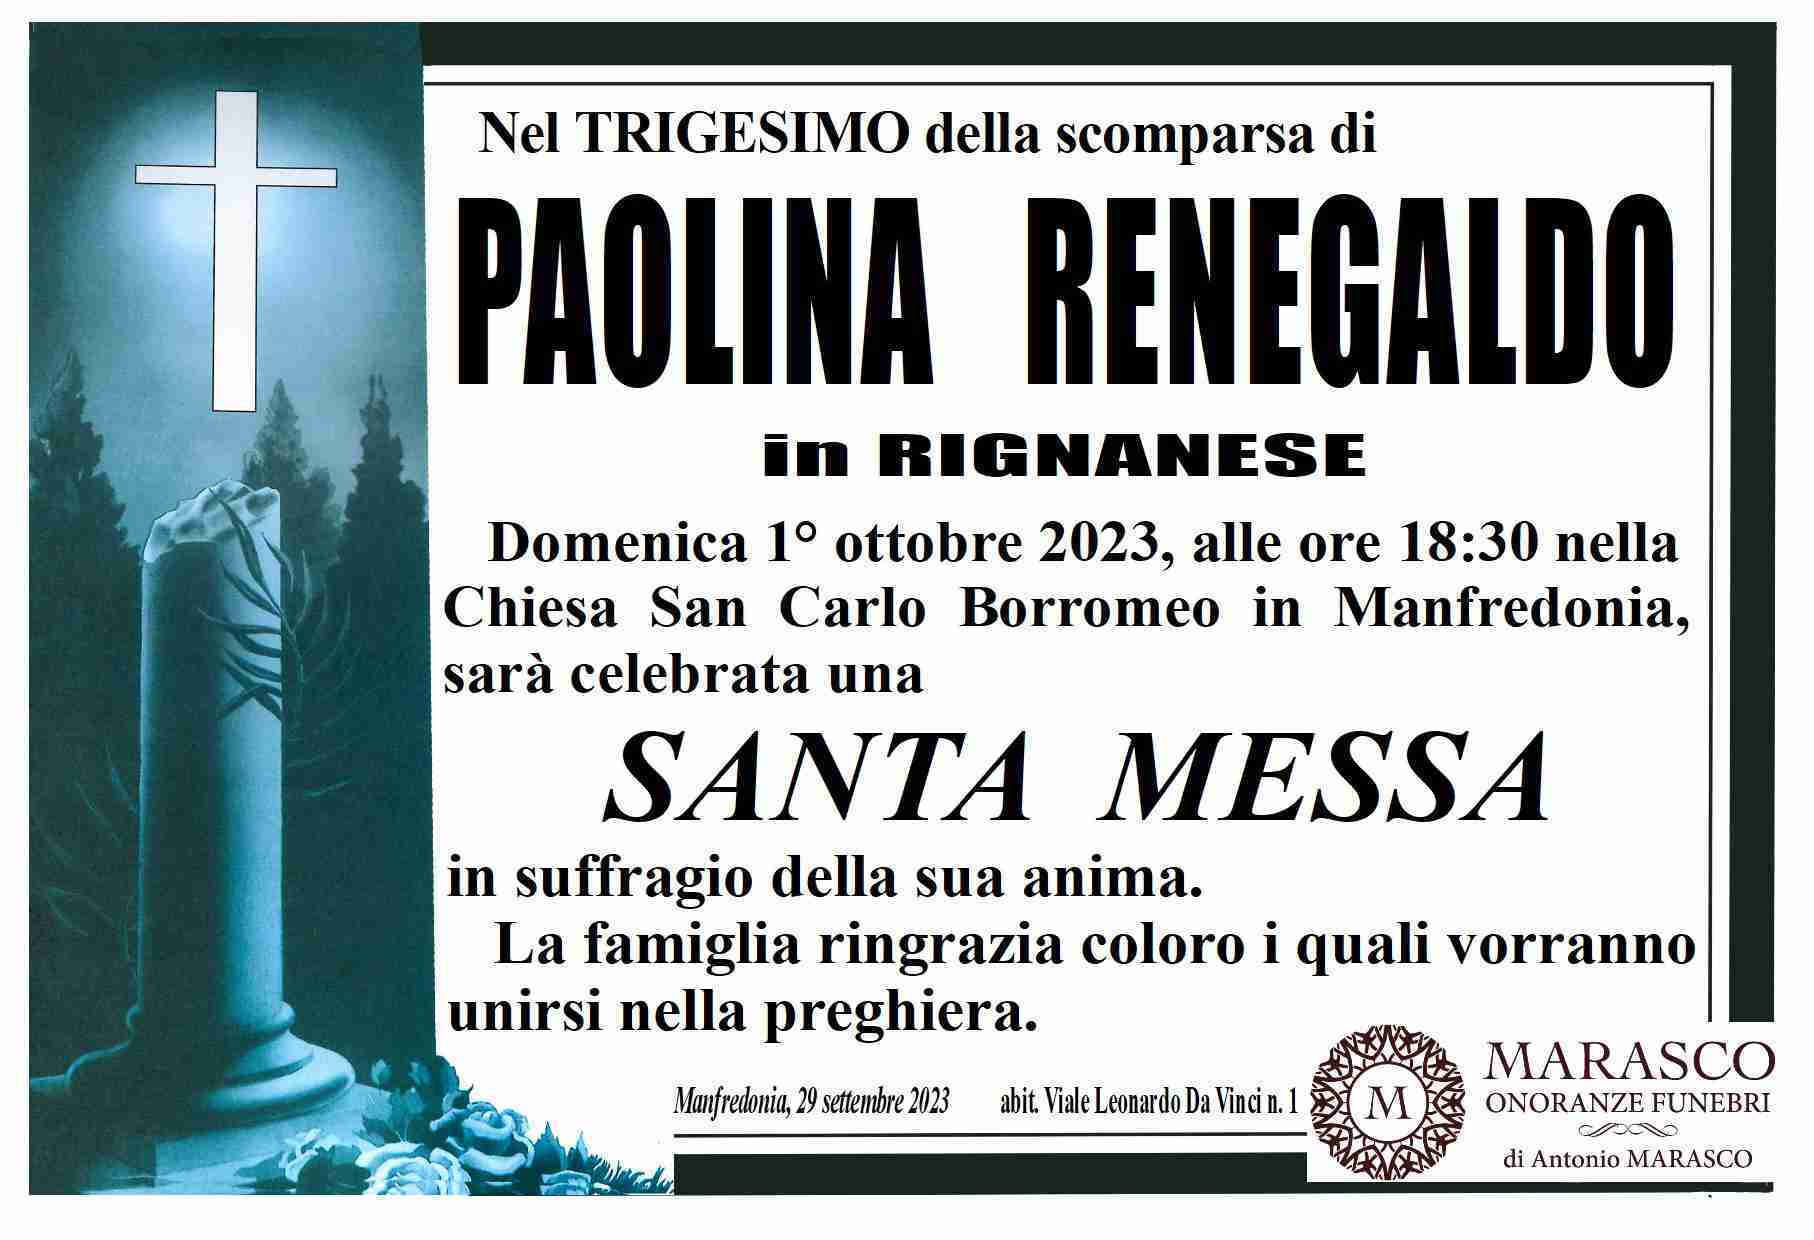 Paolina Renegaldo